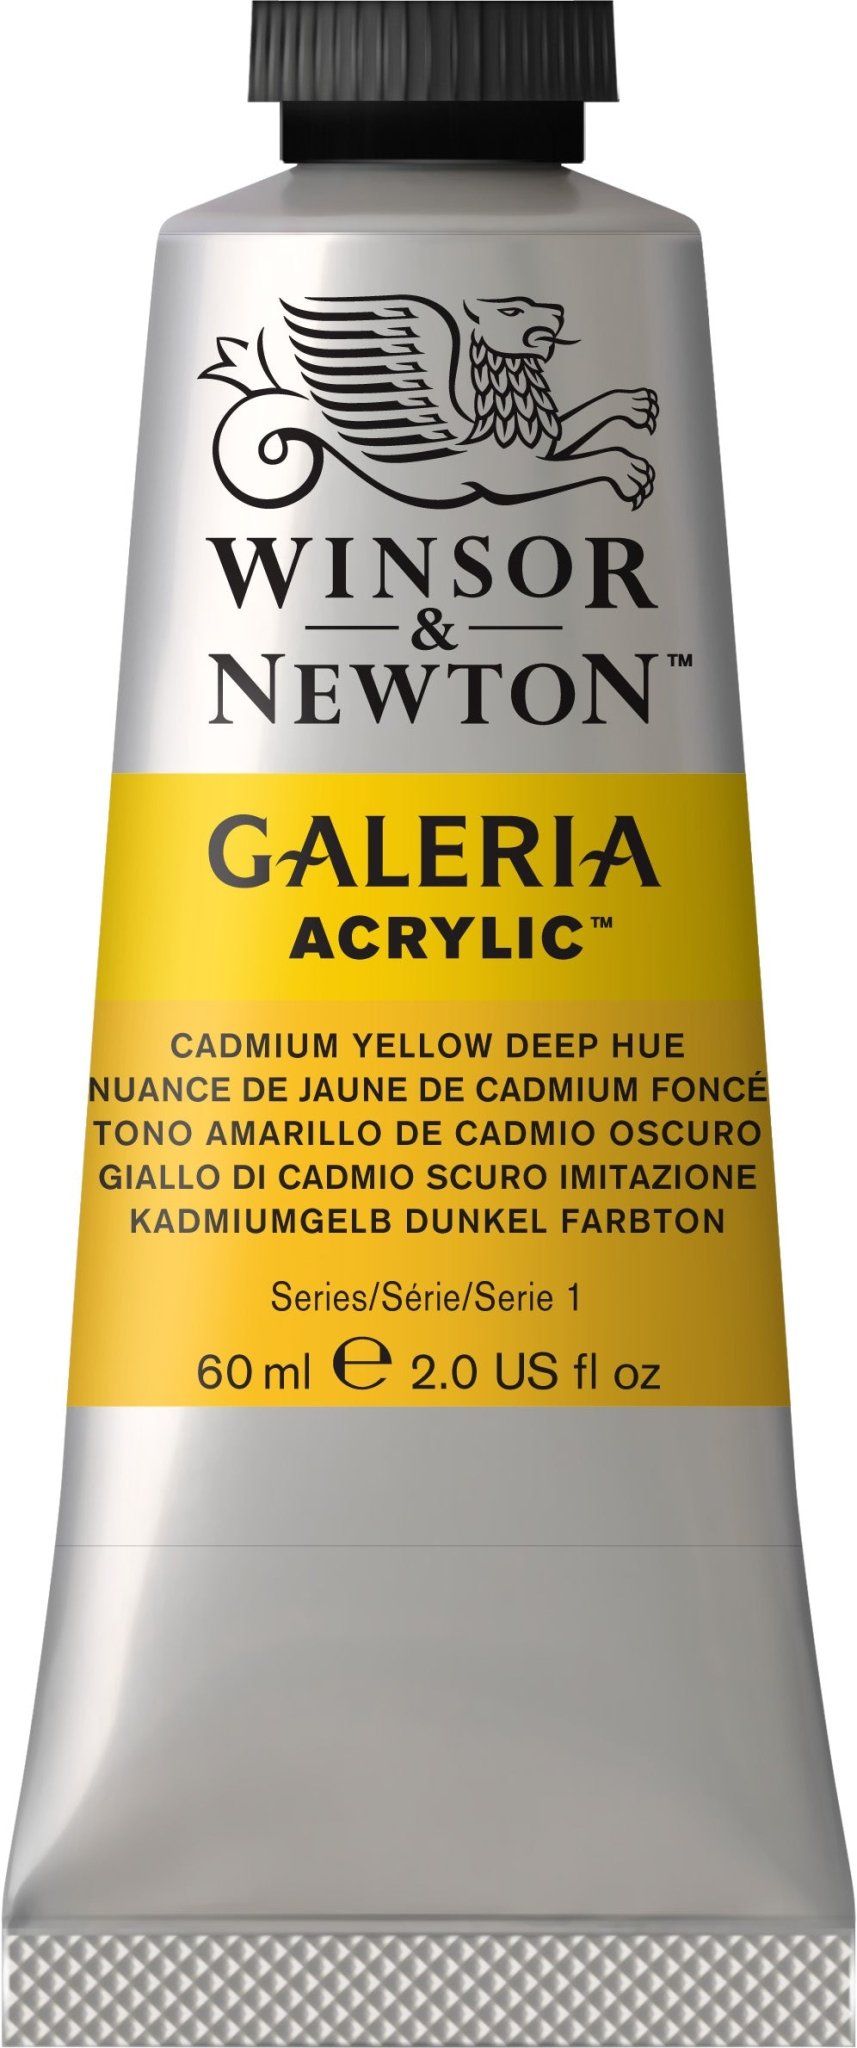 W & N Galeria Acrylic 60ml Cadmium Yellow Deep Hue - theartshop.com.au